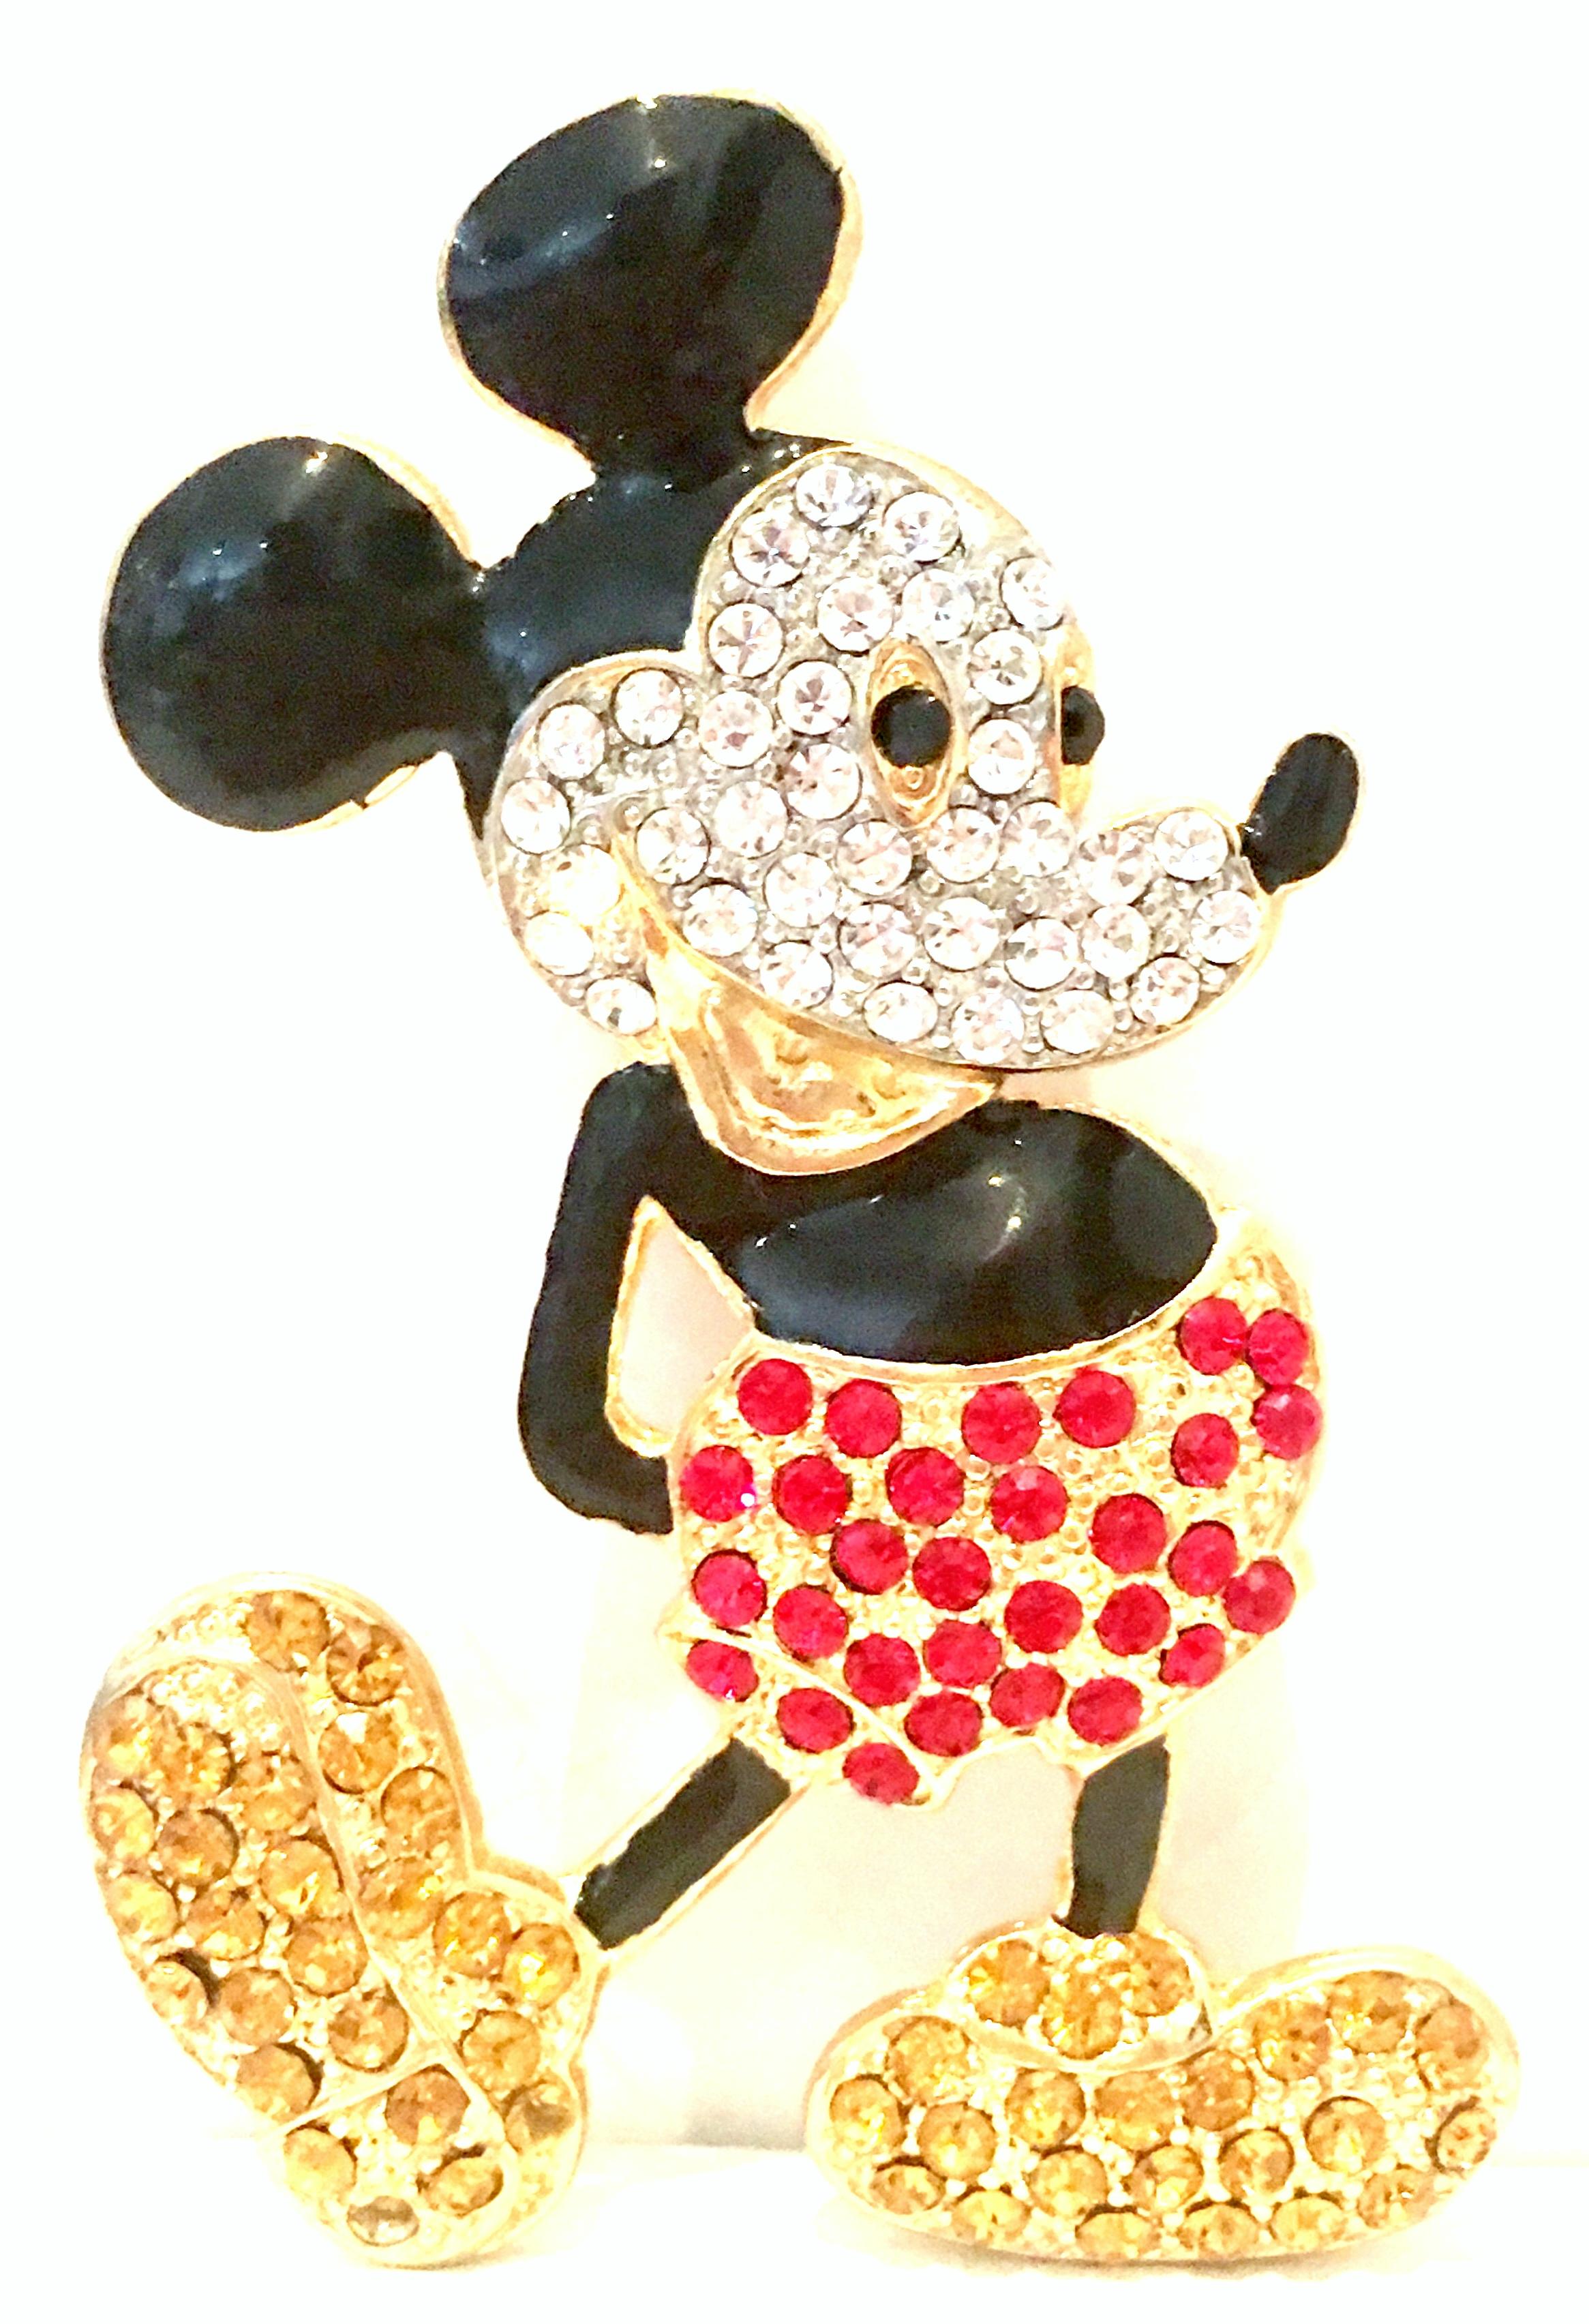 20th Century Gold, Enamel & Swarovski Crystal Mickey Mouse Brooch By, Disney.
This 3